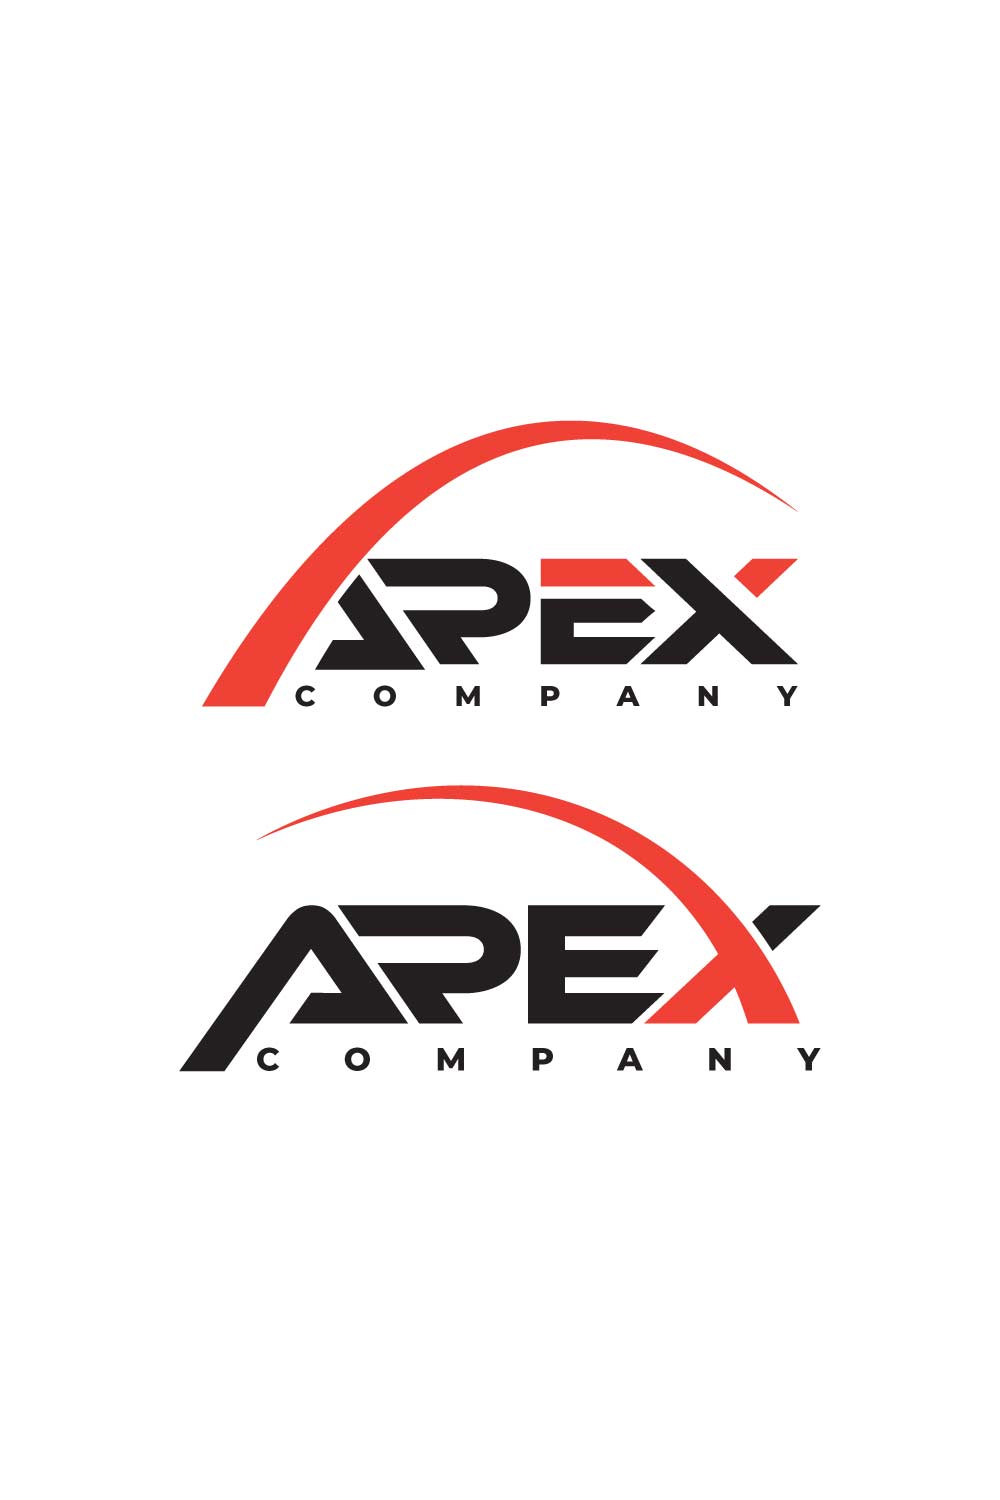 Apex creative letter branding logo design Concept pinterest preview image.